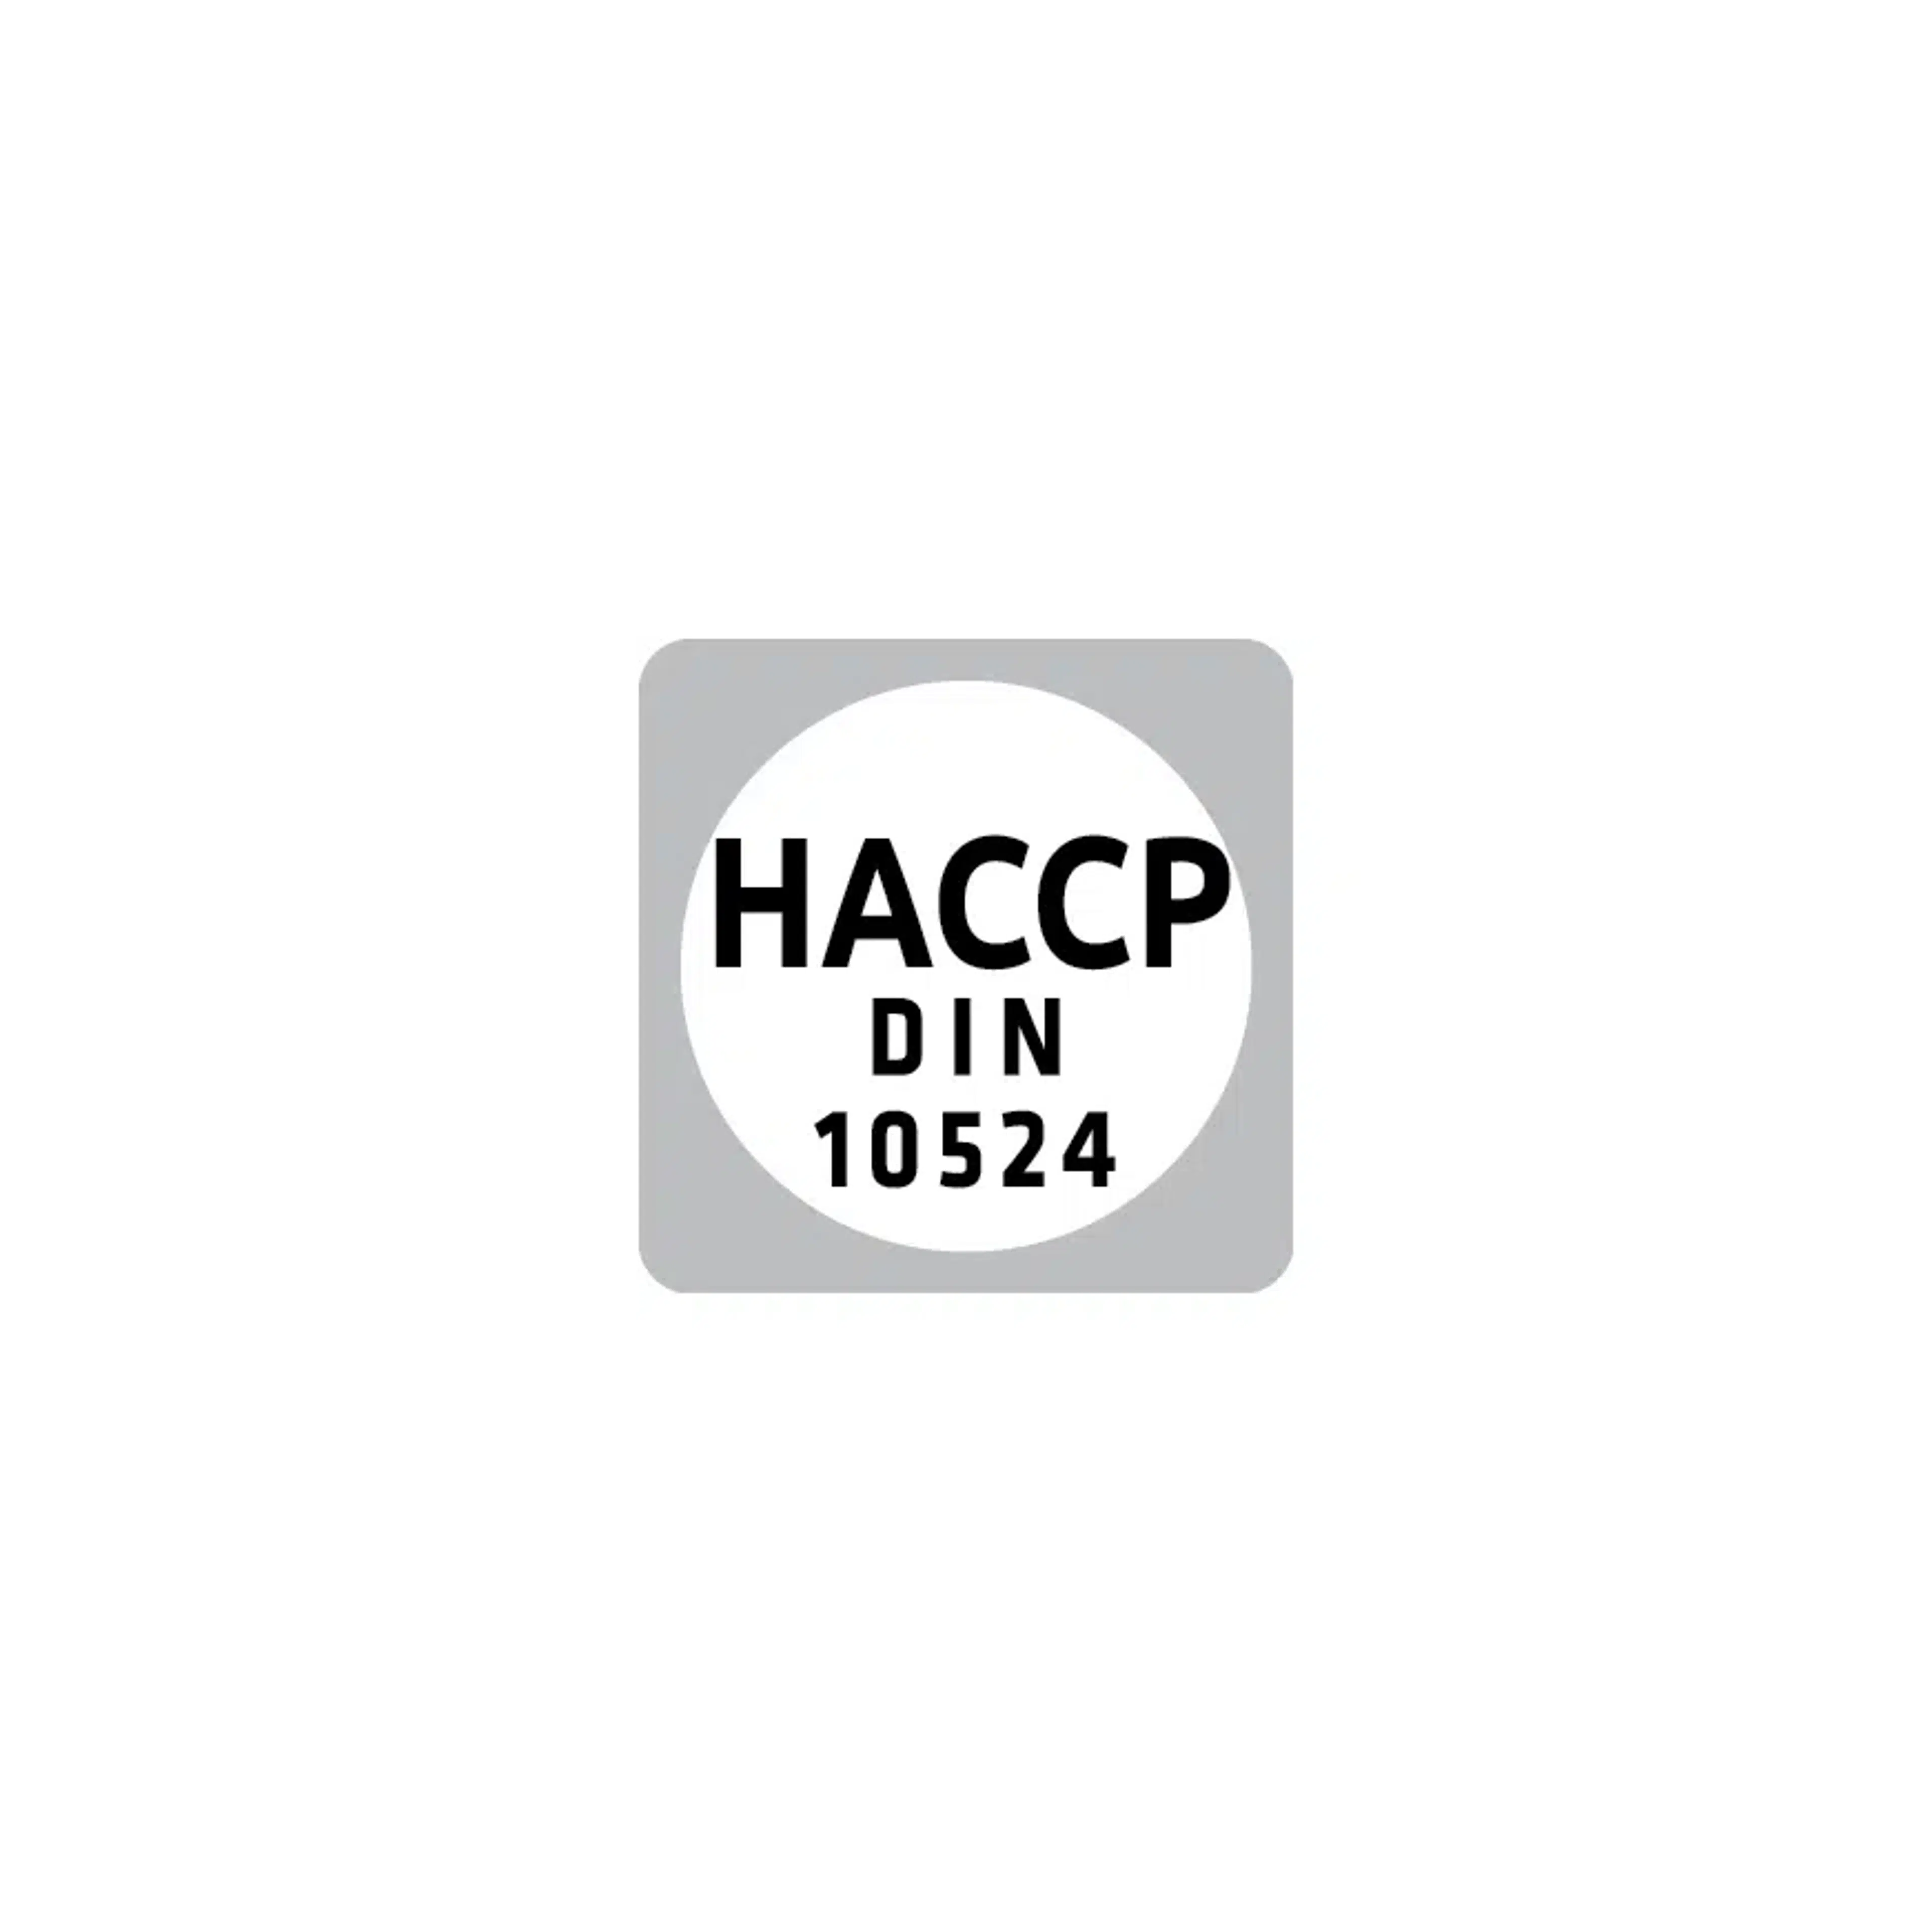 HACCP DIN 10524